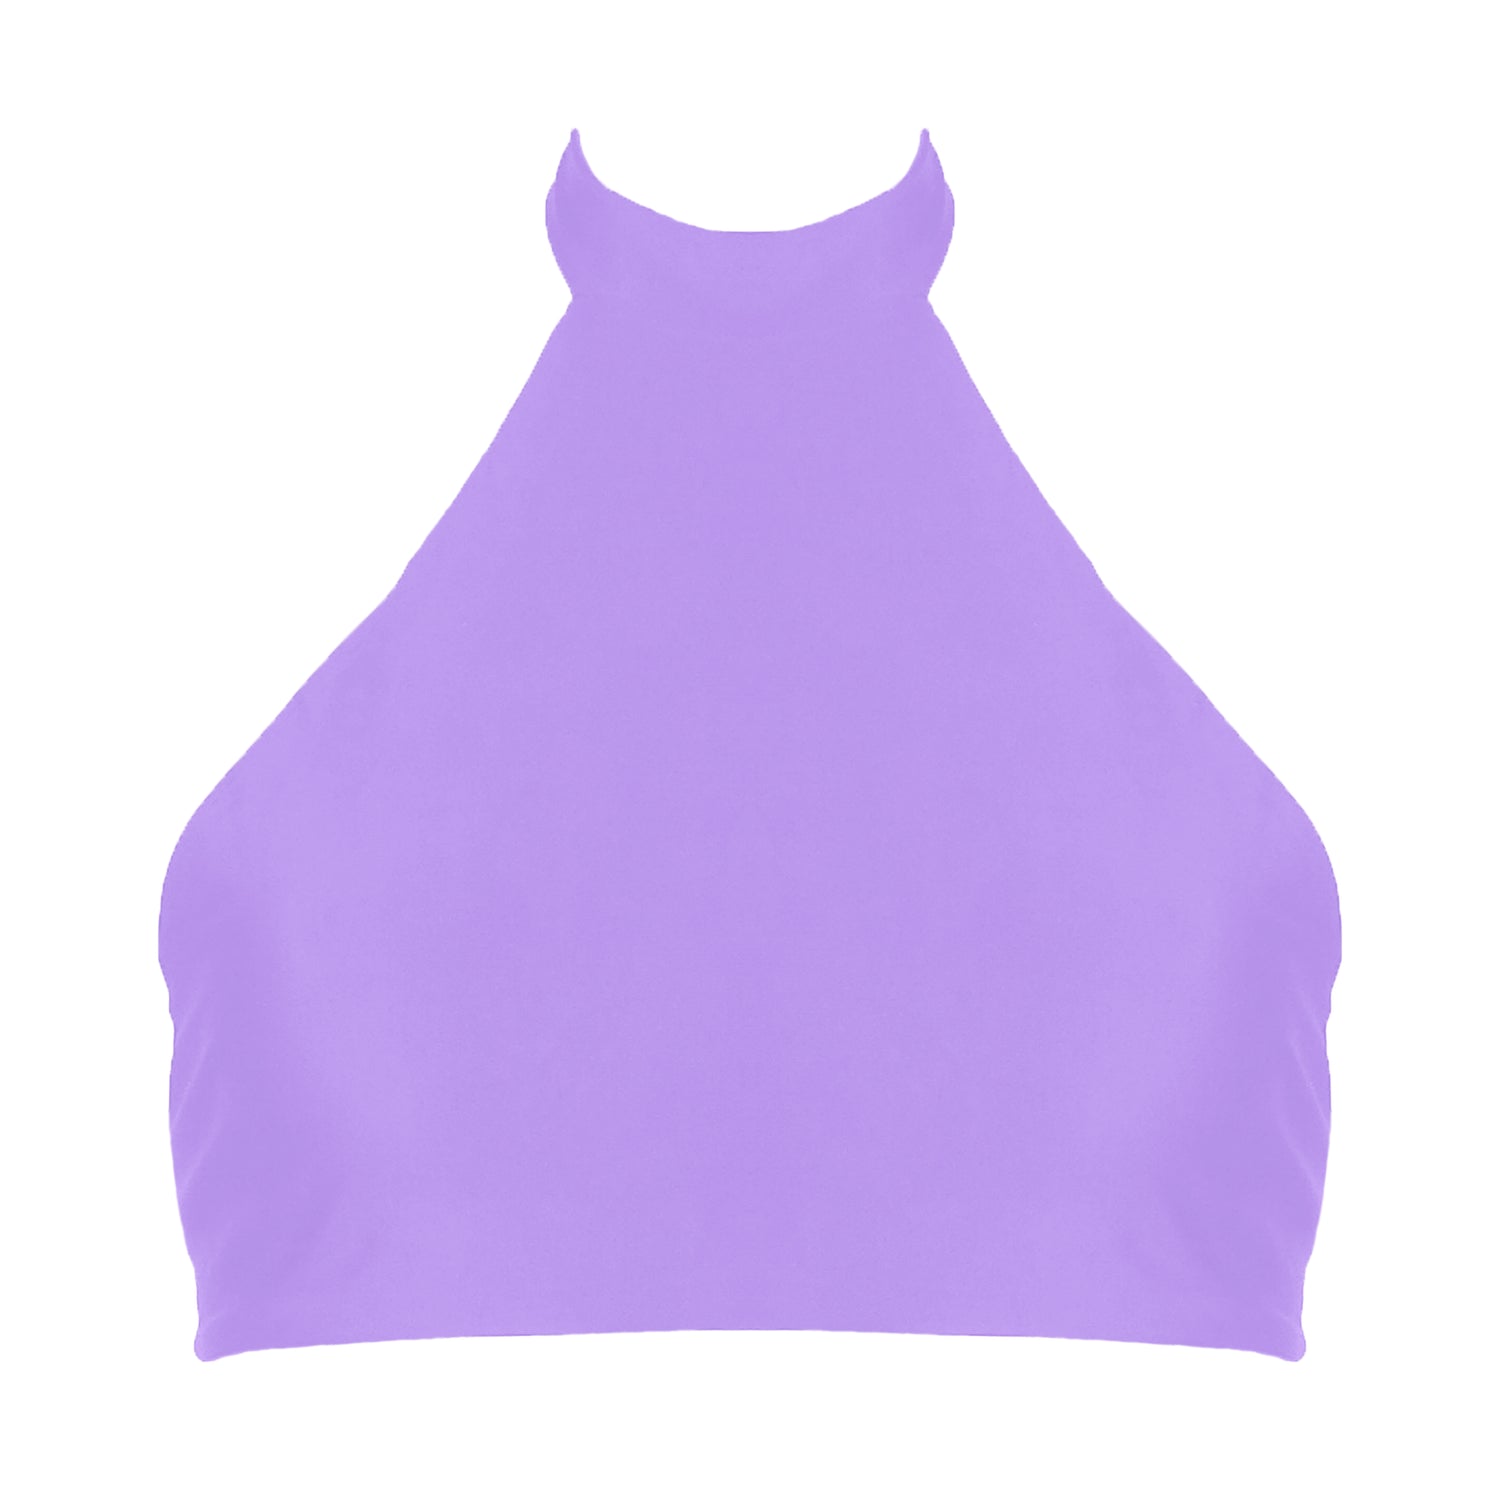 Lavender purple sport inspired halter neck bikini top with adjustable tie back straps.